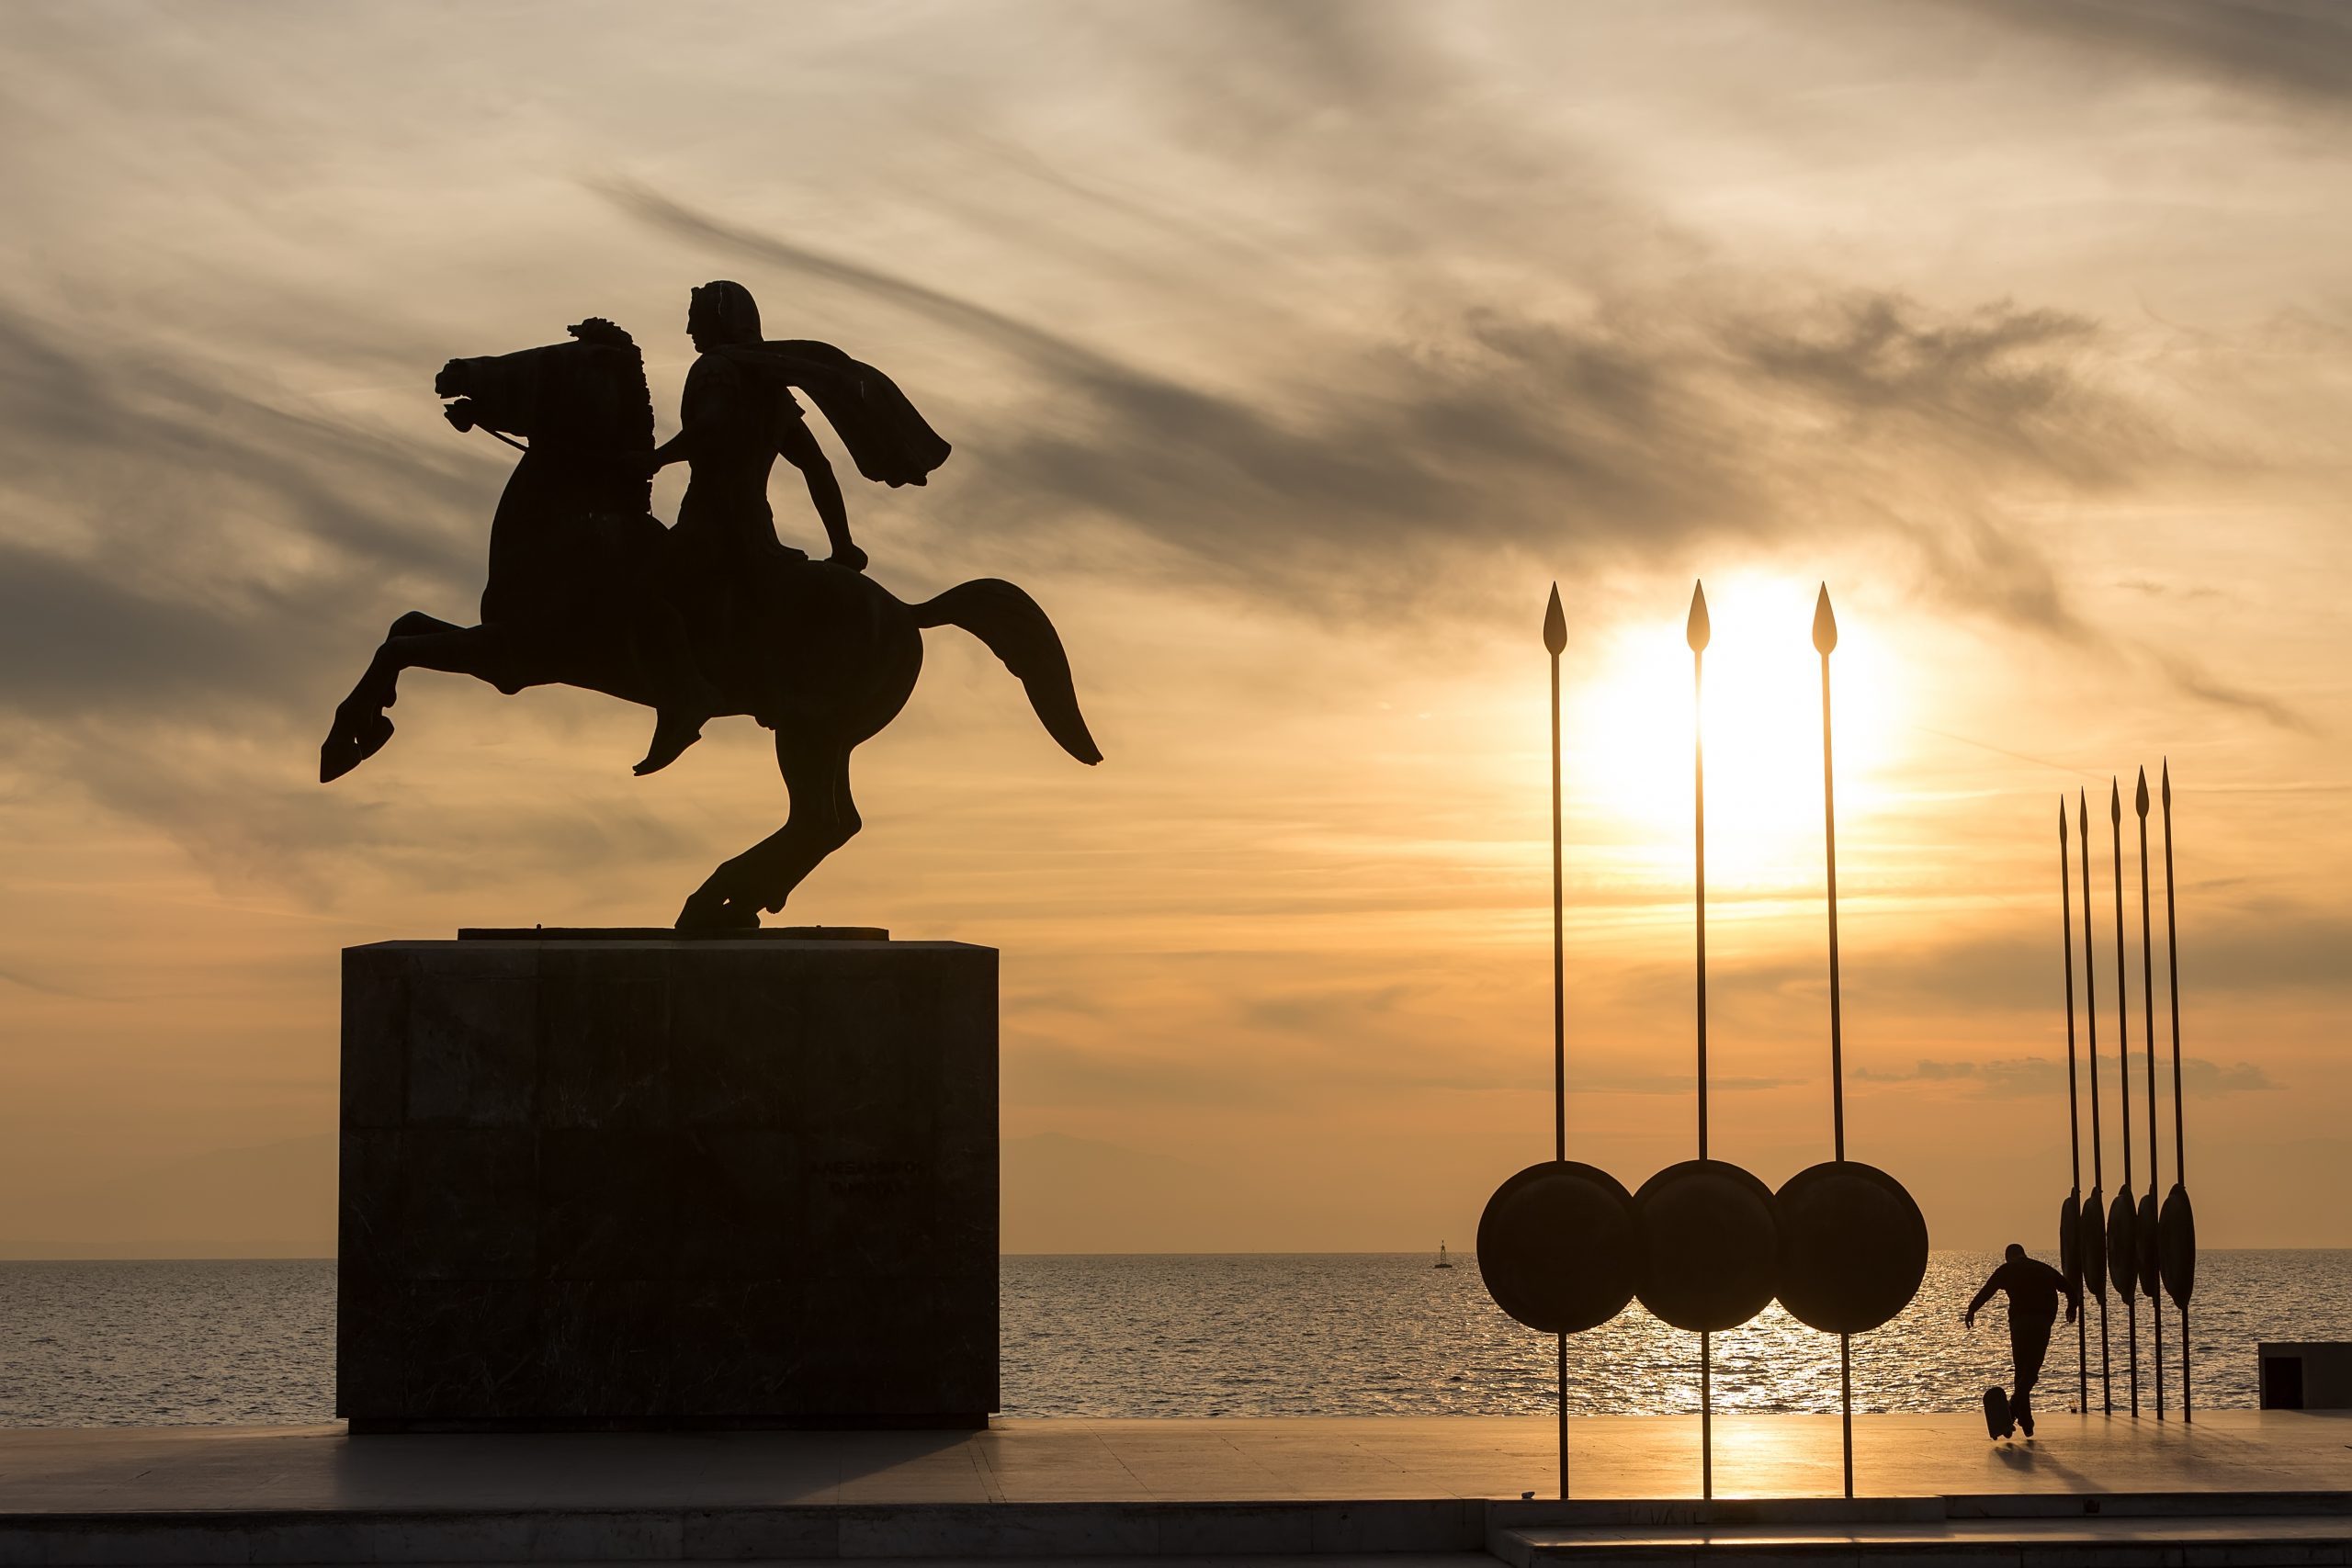 Silhouette of Alexander the Great Statue at sunrise. Thessaloniki city. Greece. Depositphotos.